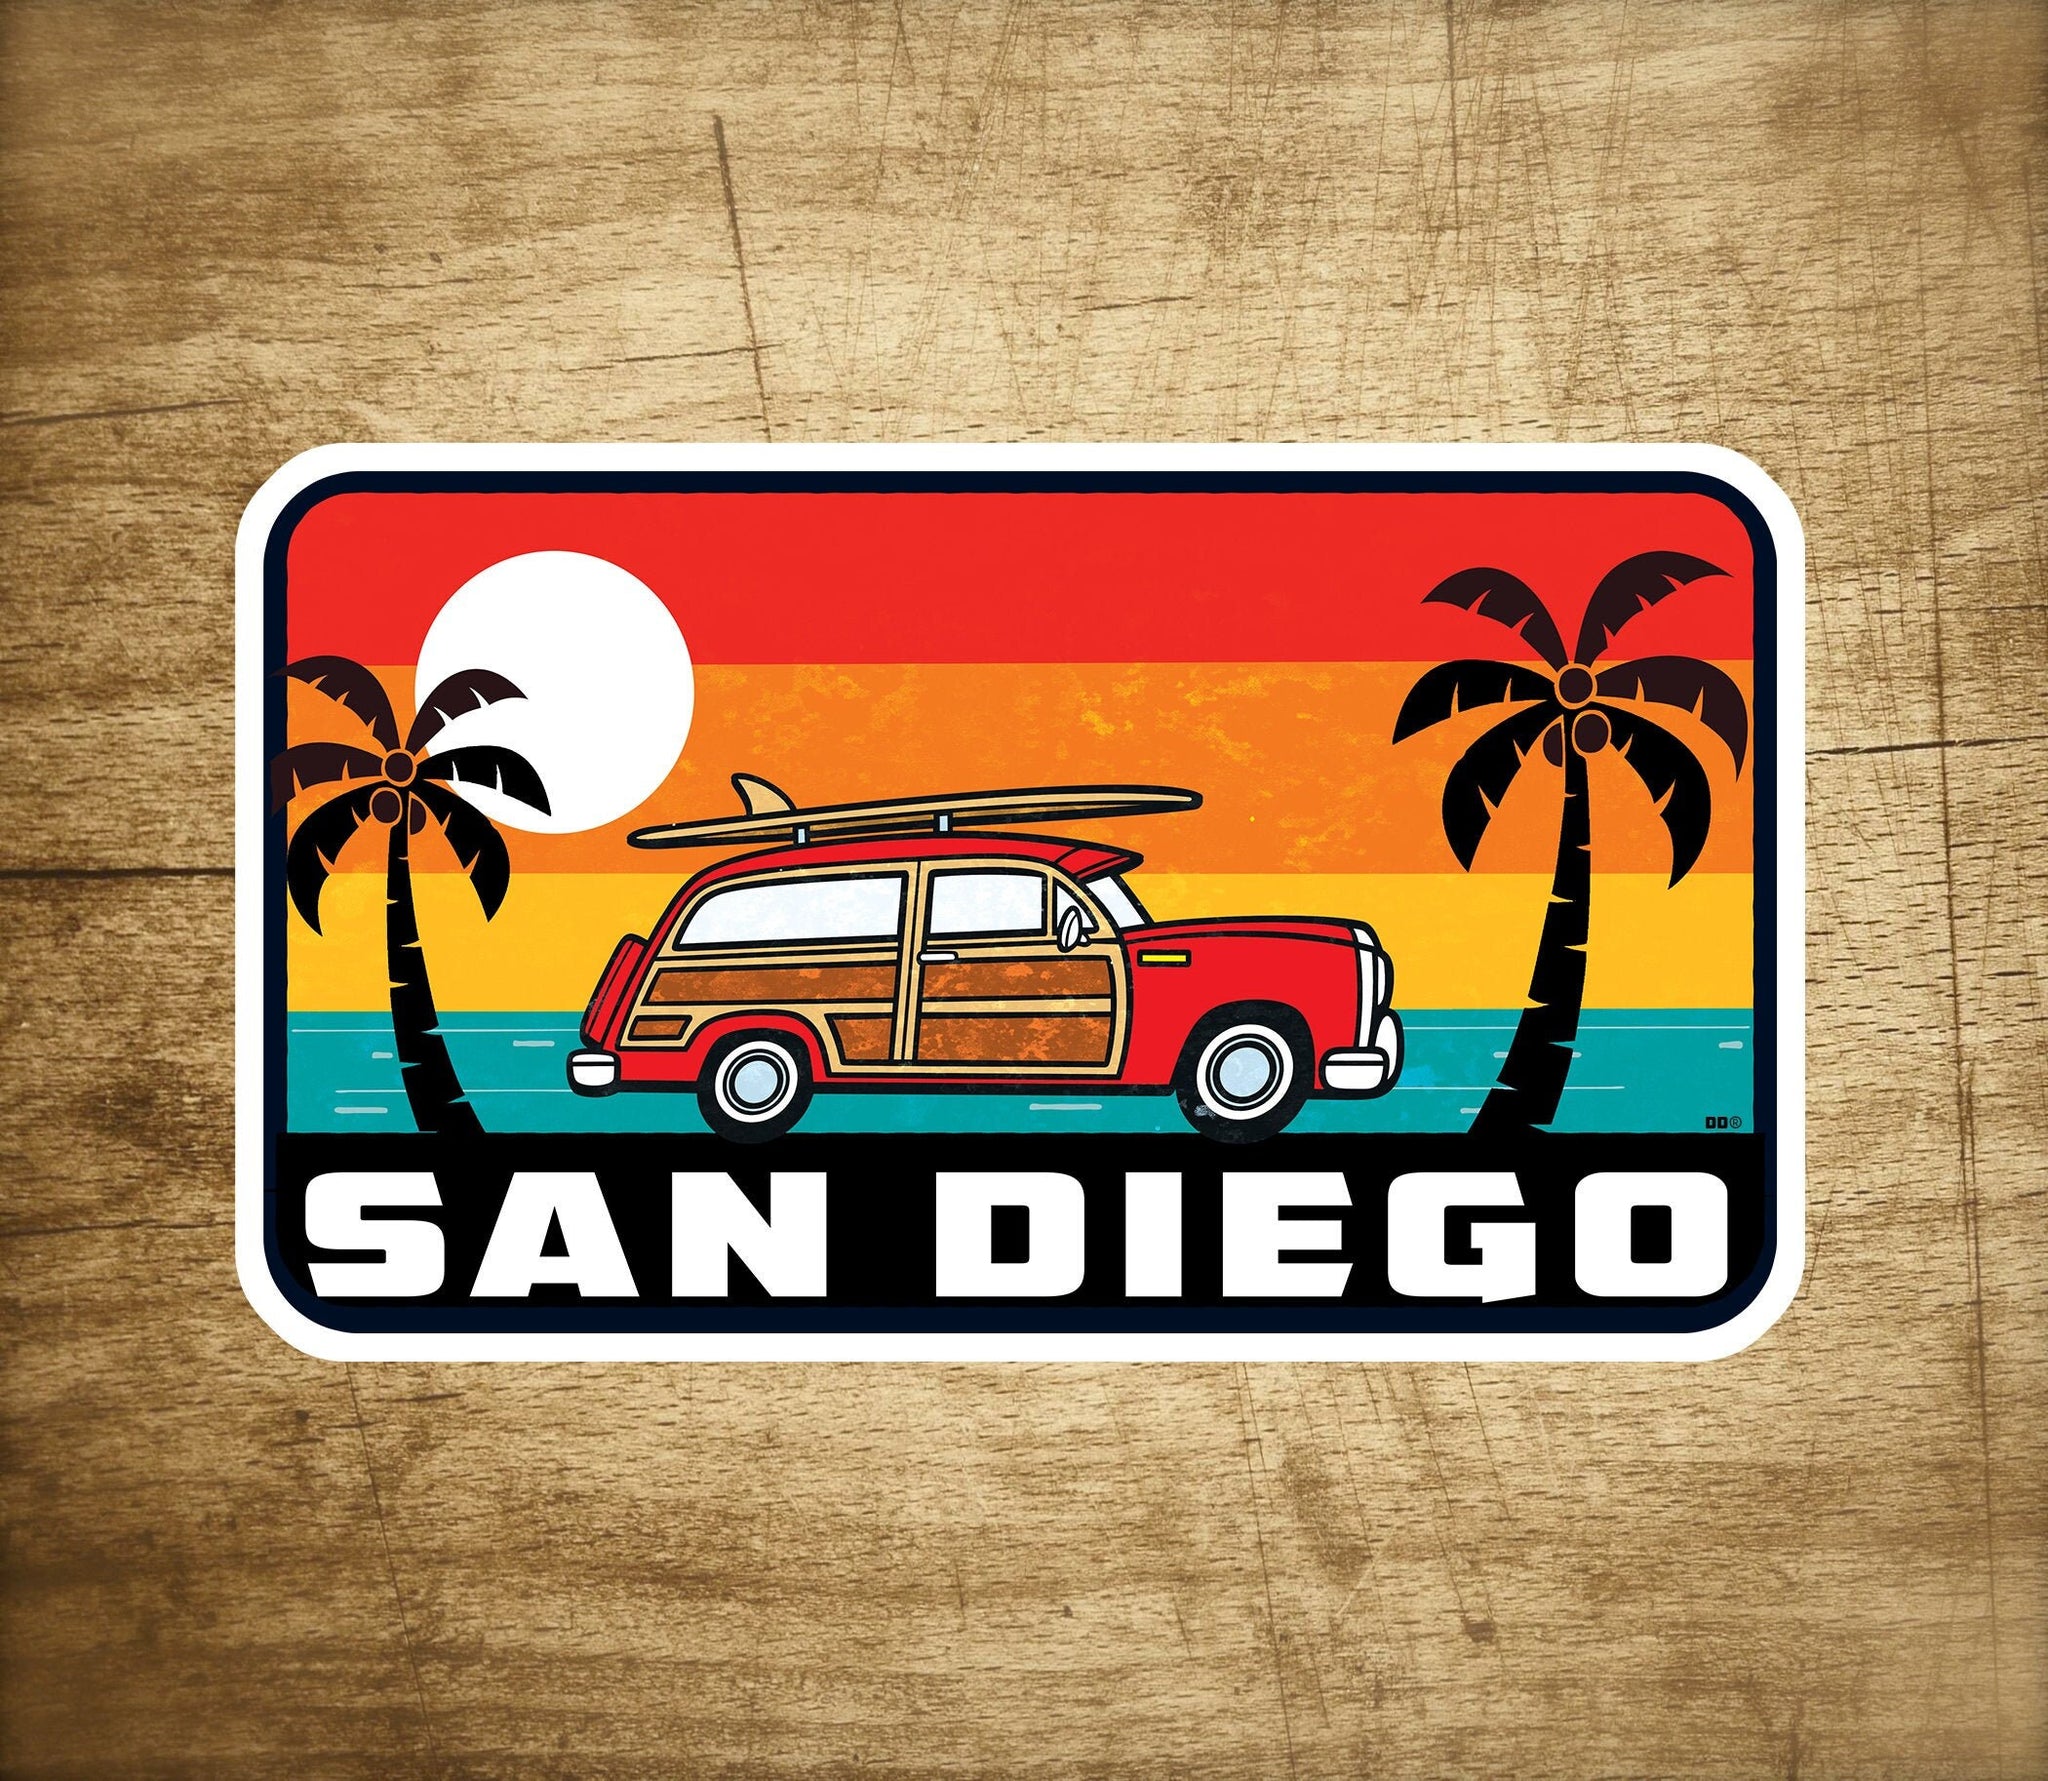 San Diego California Decal Sticker 3.75" X 2.2" Surf La Jolla Surfing